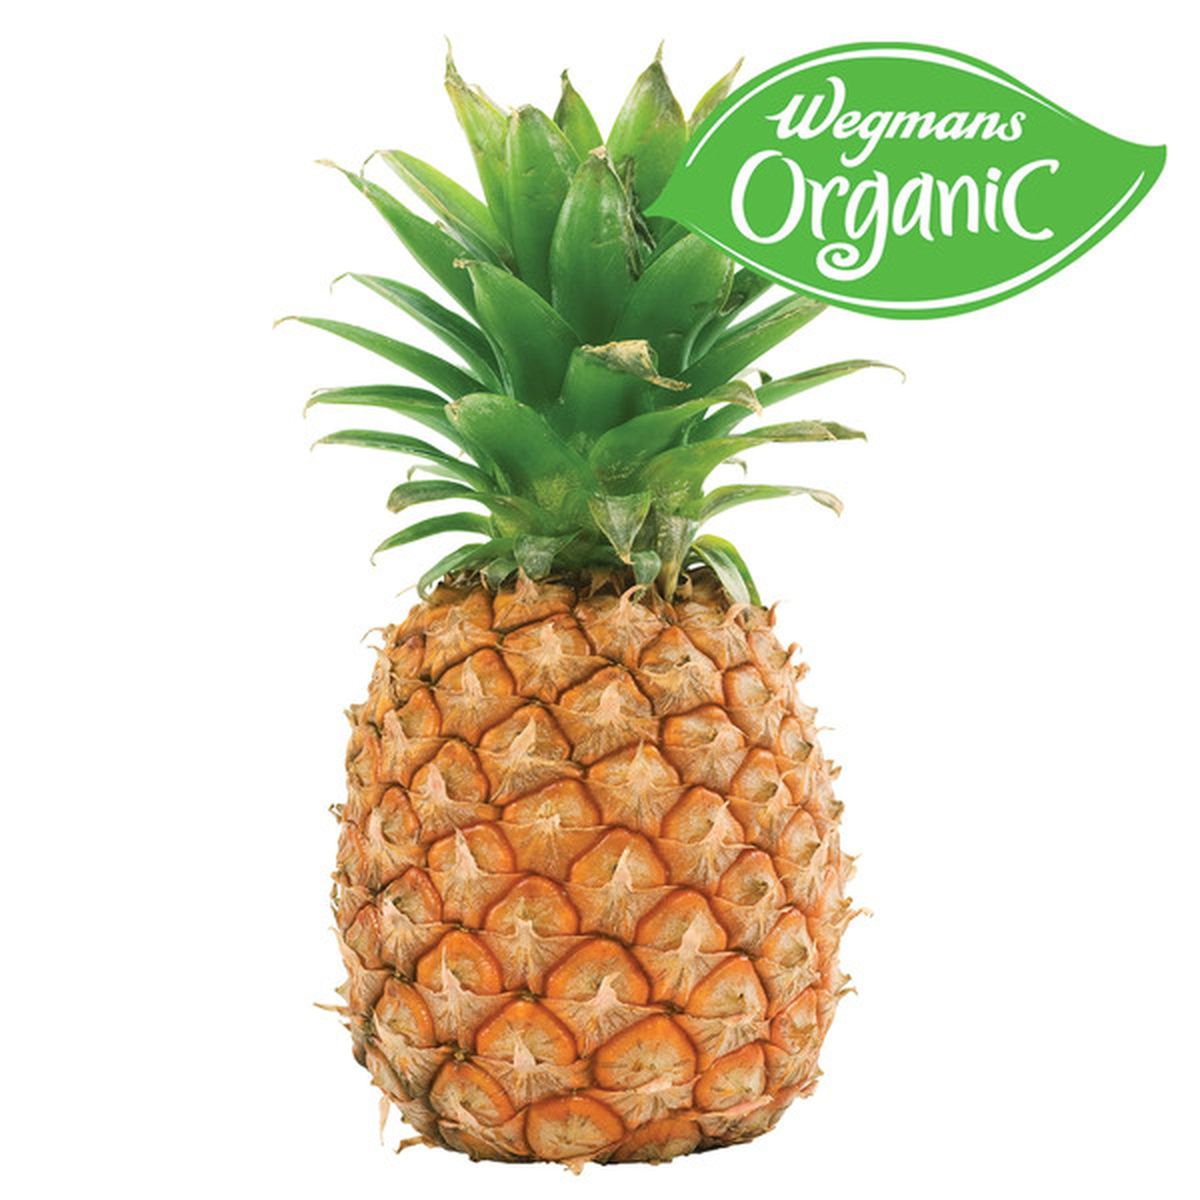 Calories in Wegmans Organic Pineapple